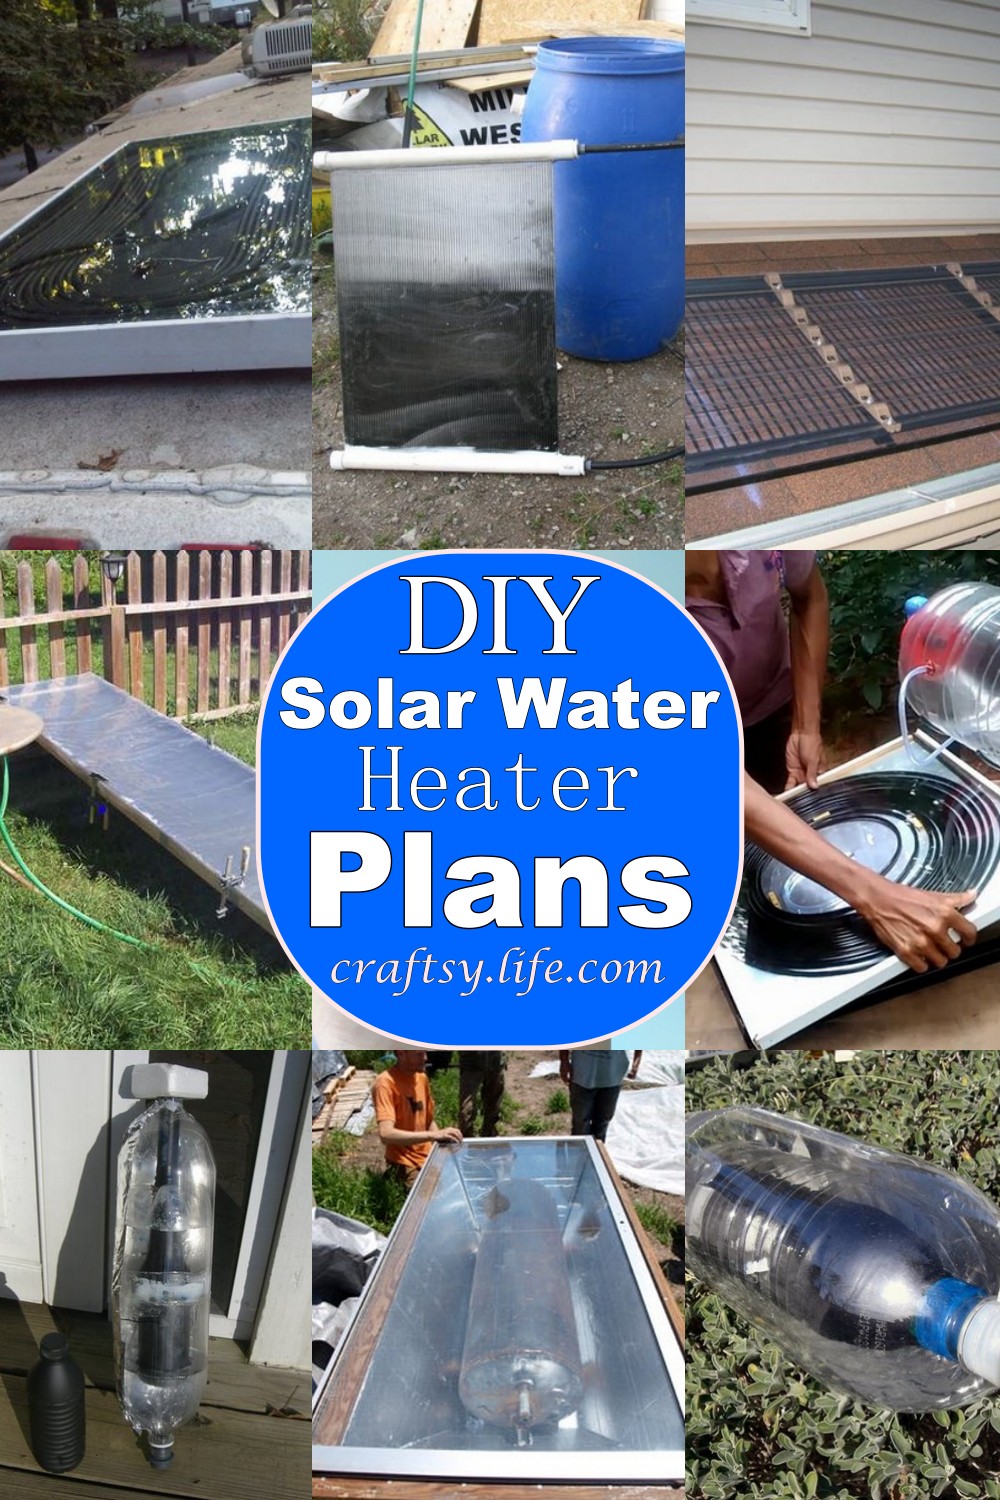 DIY Solar Water Heater Plans